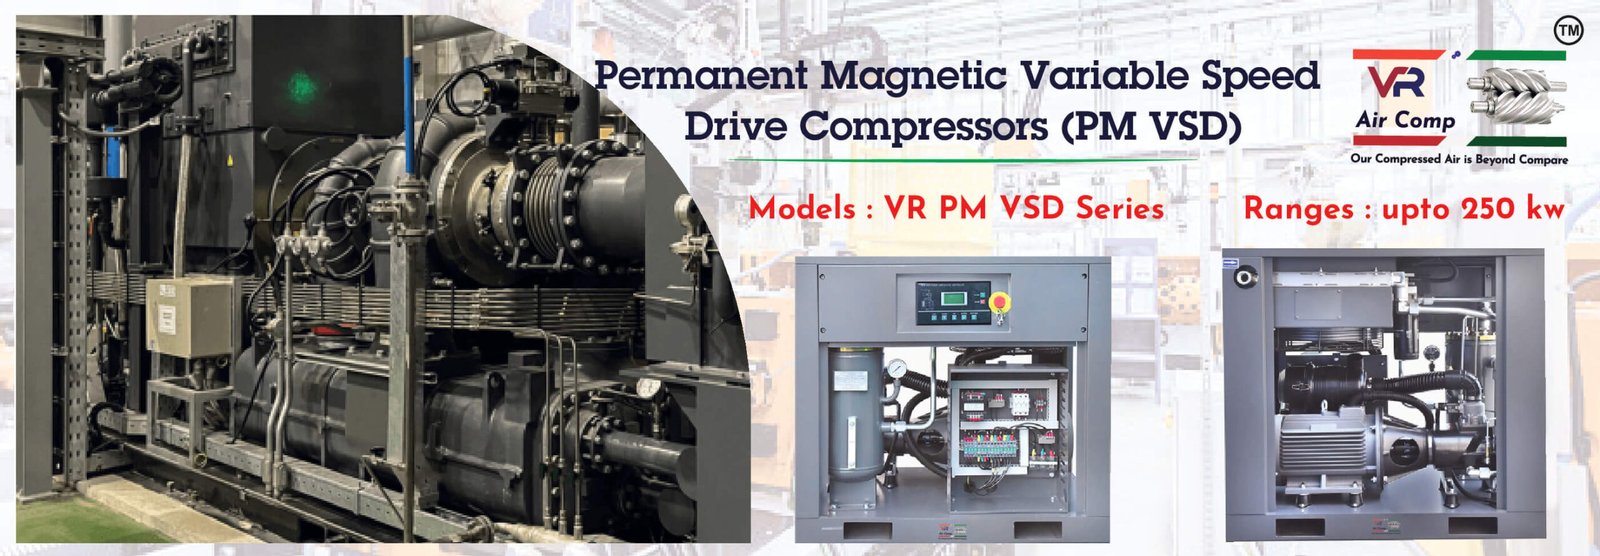 VR PM VSD Compressor